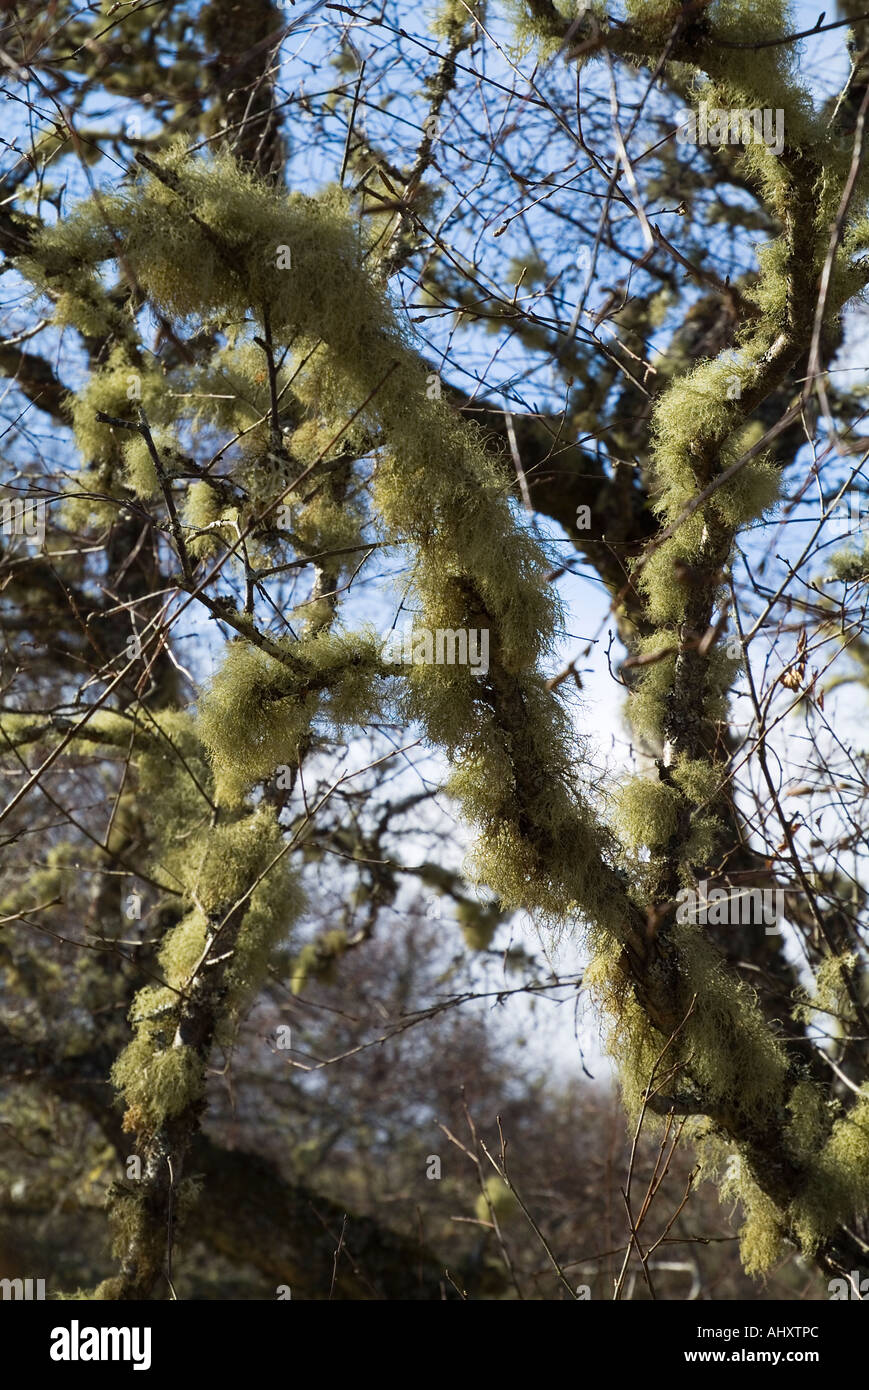 dh Lichen LICHEN UK Scotland trees Sessil oak tree branches with lichen moss usnea filipendula on branch scottish woodland Stock Photo